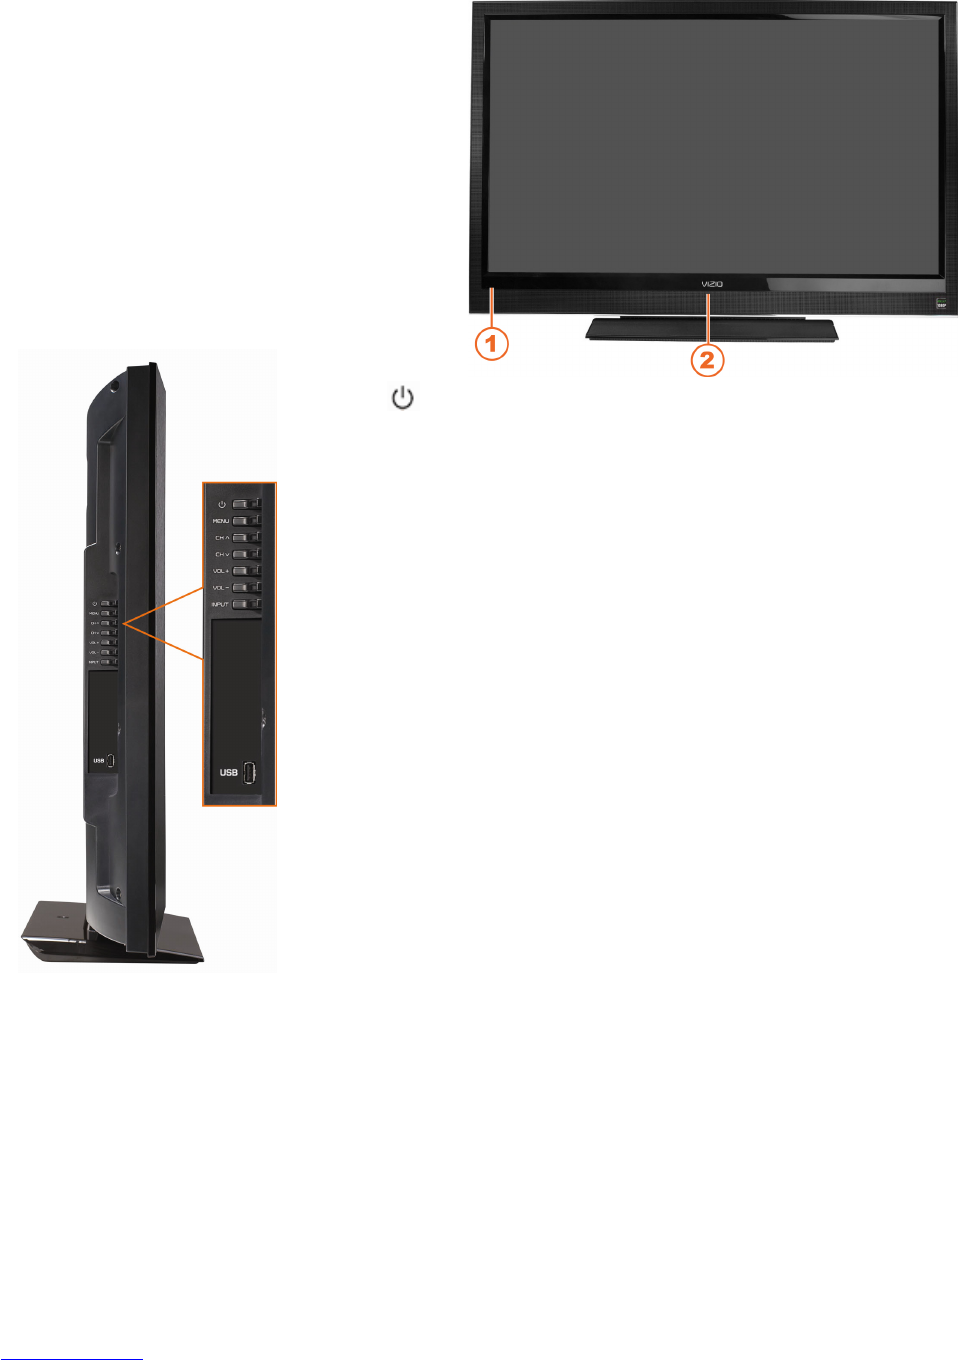 Vizio Flat Panel Television E420Vo Users Manual ManualsLib Makes ...